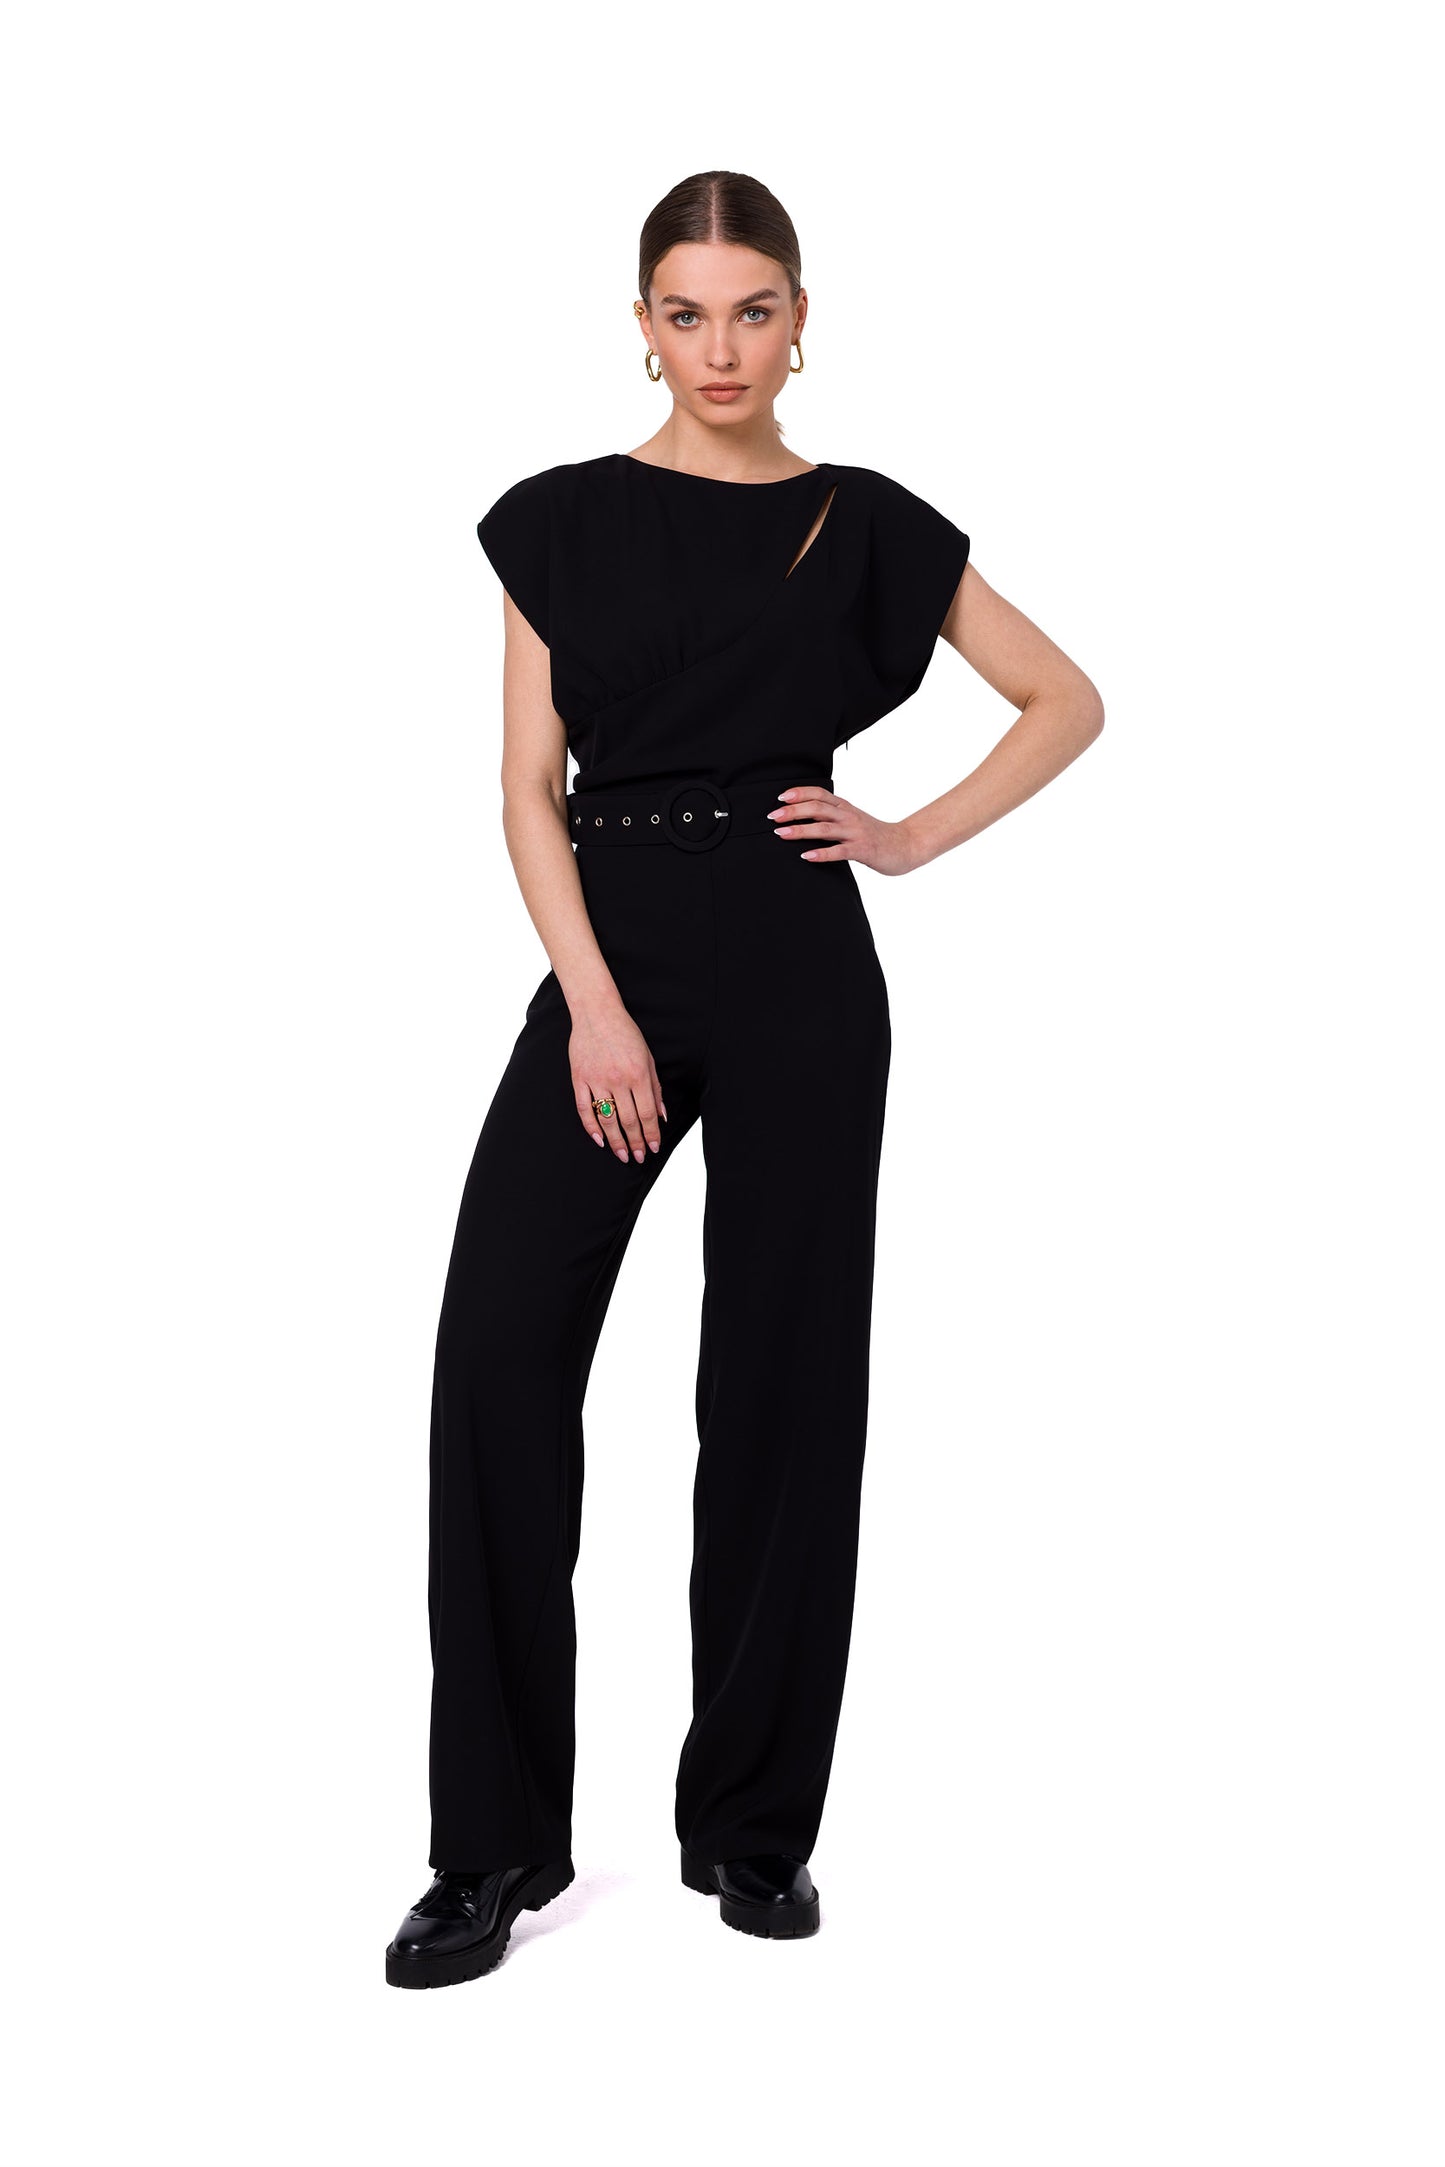 Women's Suit model 177202 - Ladies Casual Everyday Clothing - Jumpsuit & Romper - Black Color